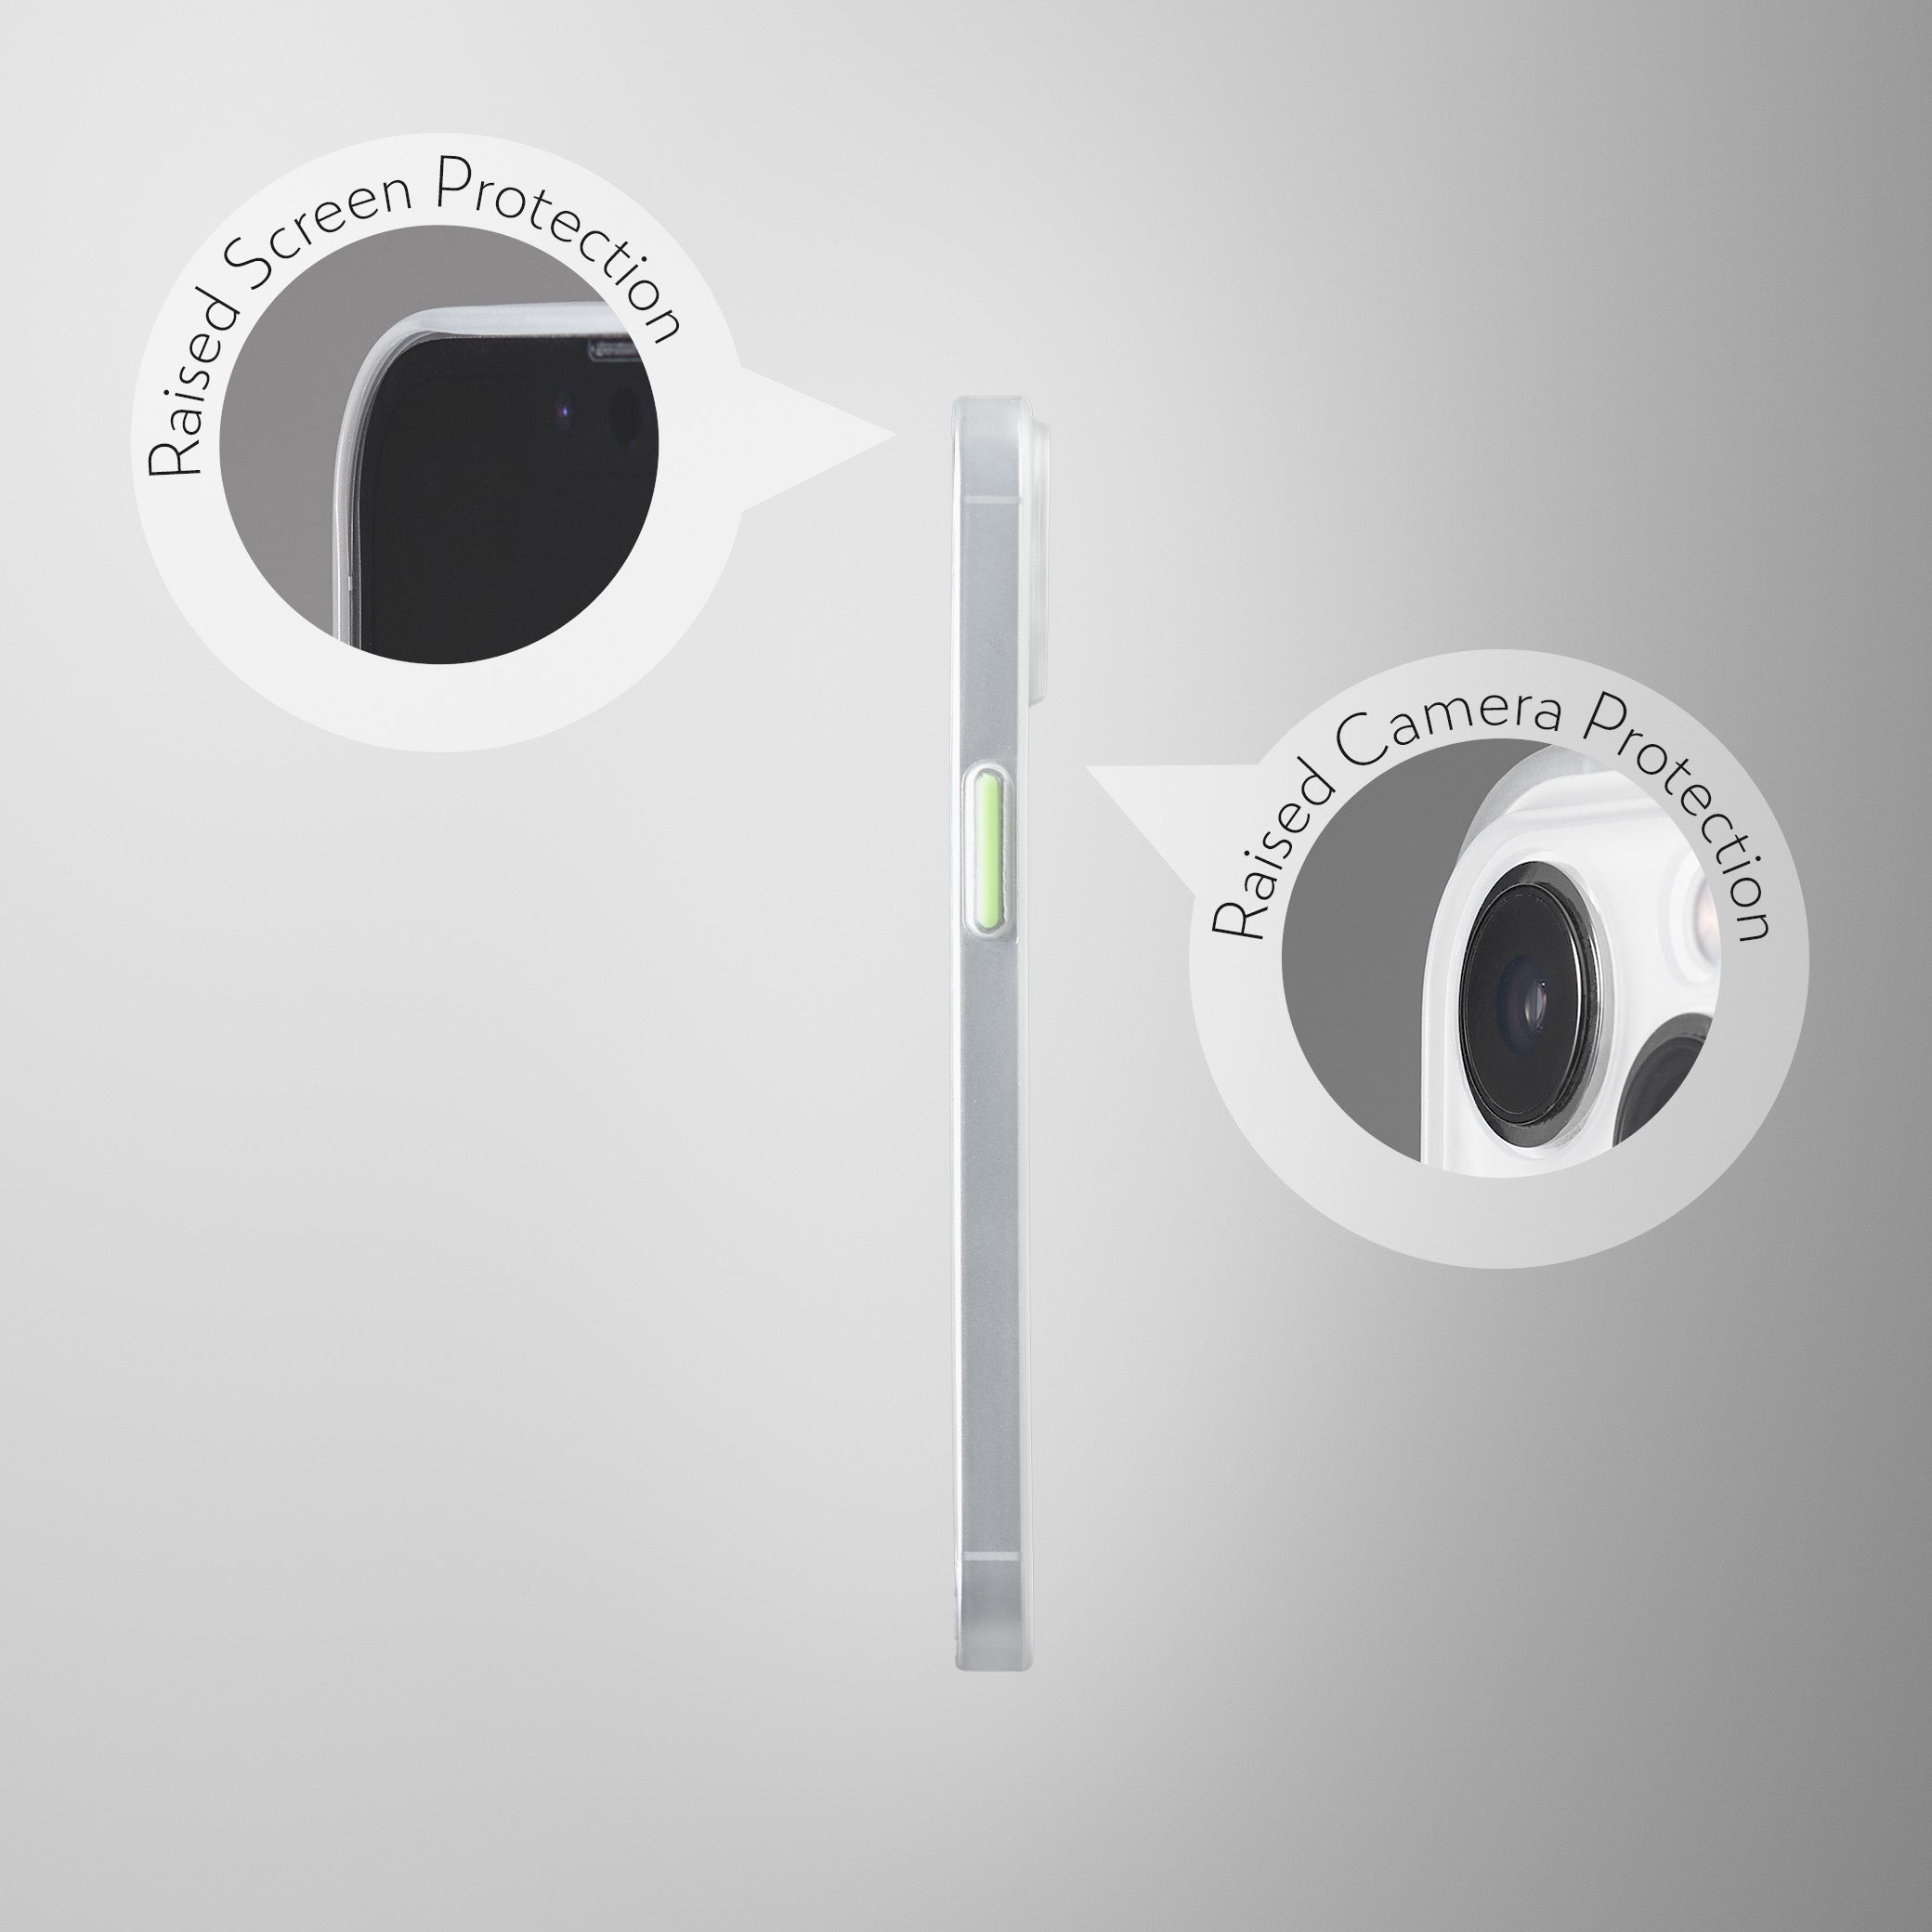 Super Slim Case 2.0 for iPhone 14 - Glazed Frost White